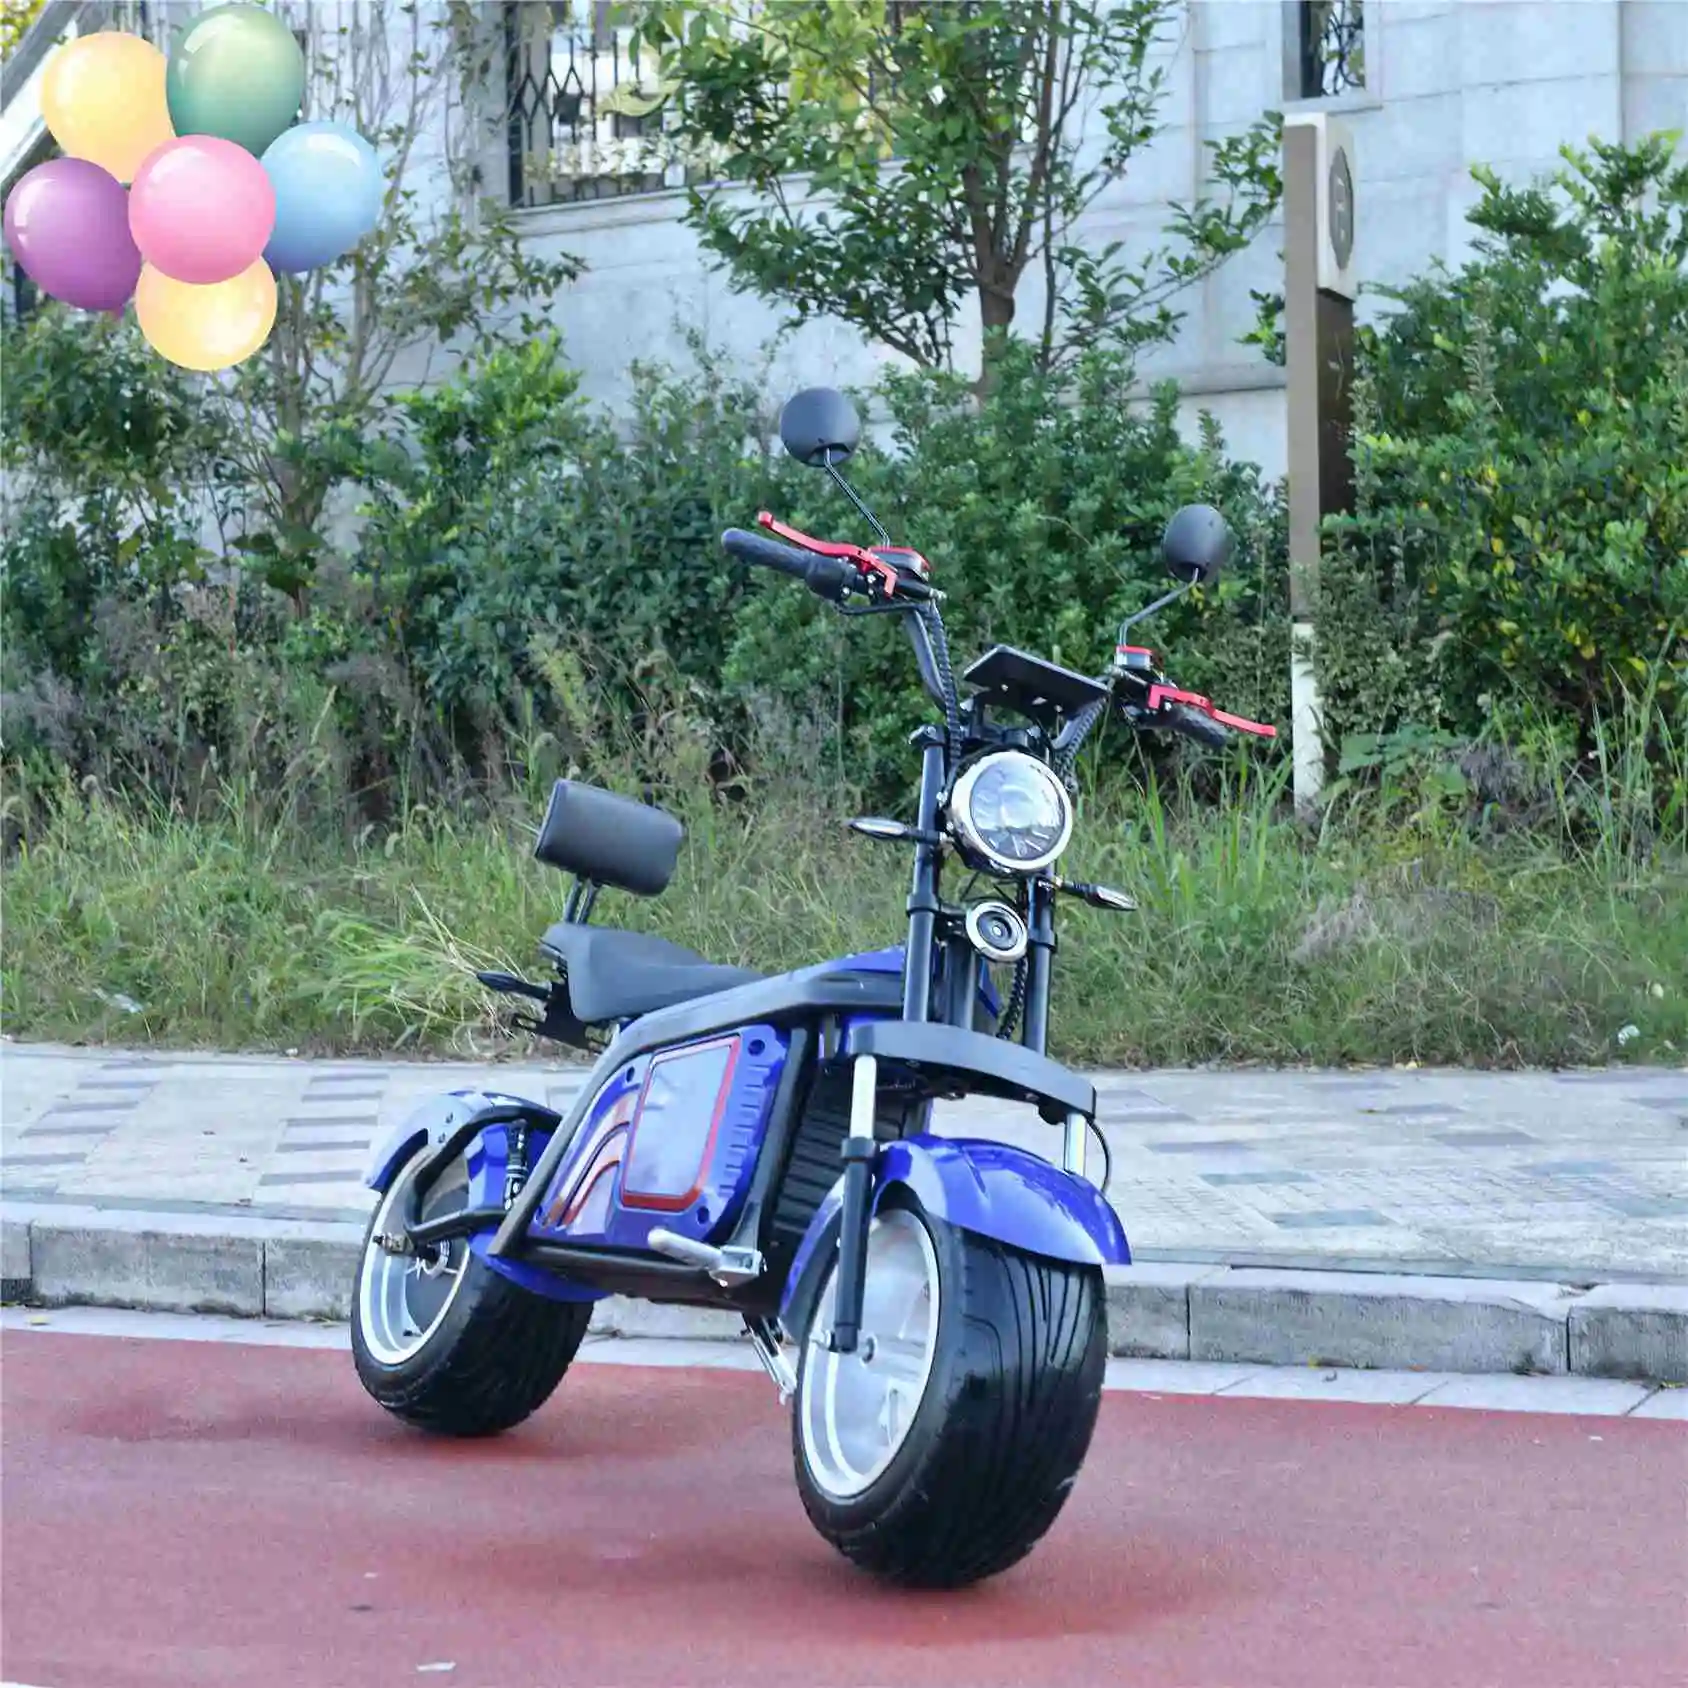 

2000W 400W 2 Wheel Adult Lightweight Mobility Mini Citycoco Folding Electric Scooter